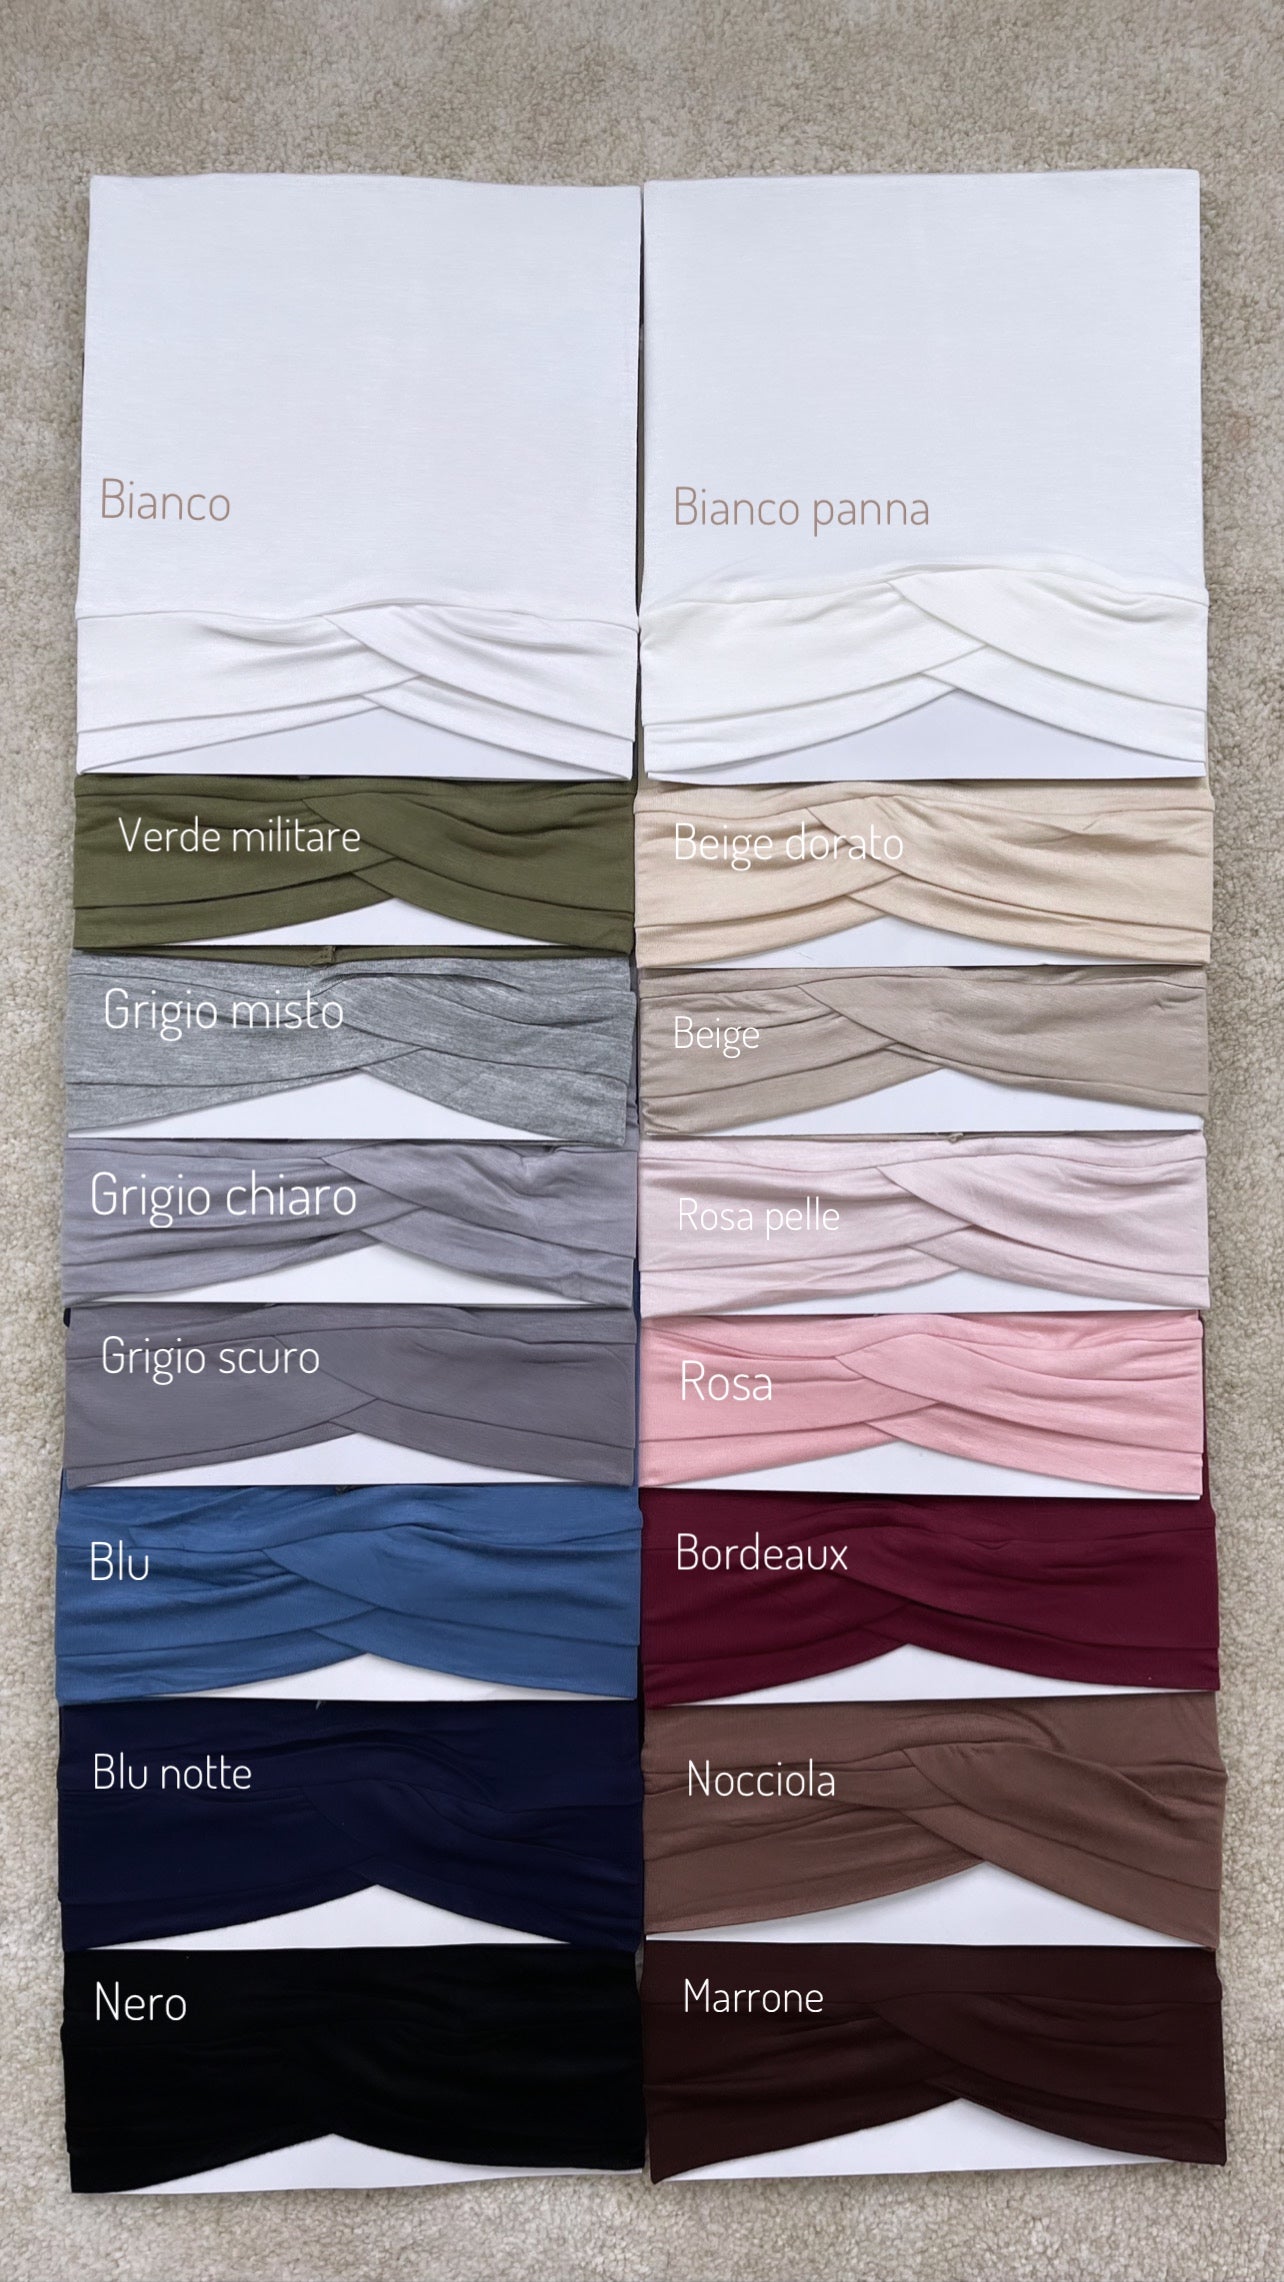 Cuffia tubo incrociata - Hijab Paradise , bianco, bianco panna, beige, marrone, nero, blu notte, bordeaux, rosa, grigio